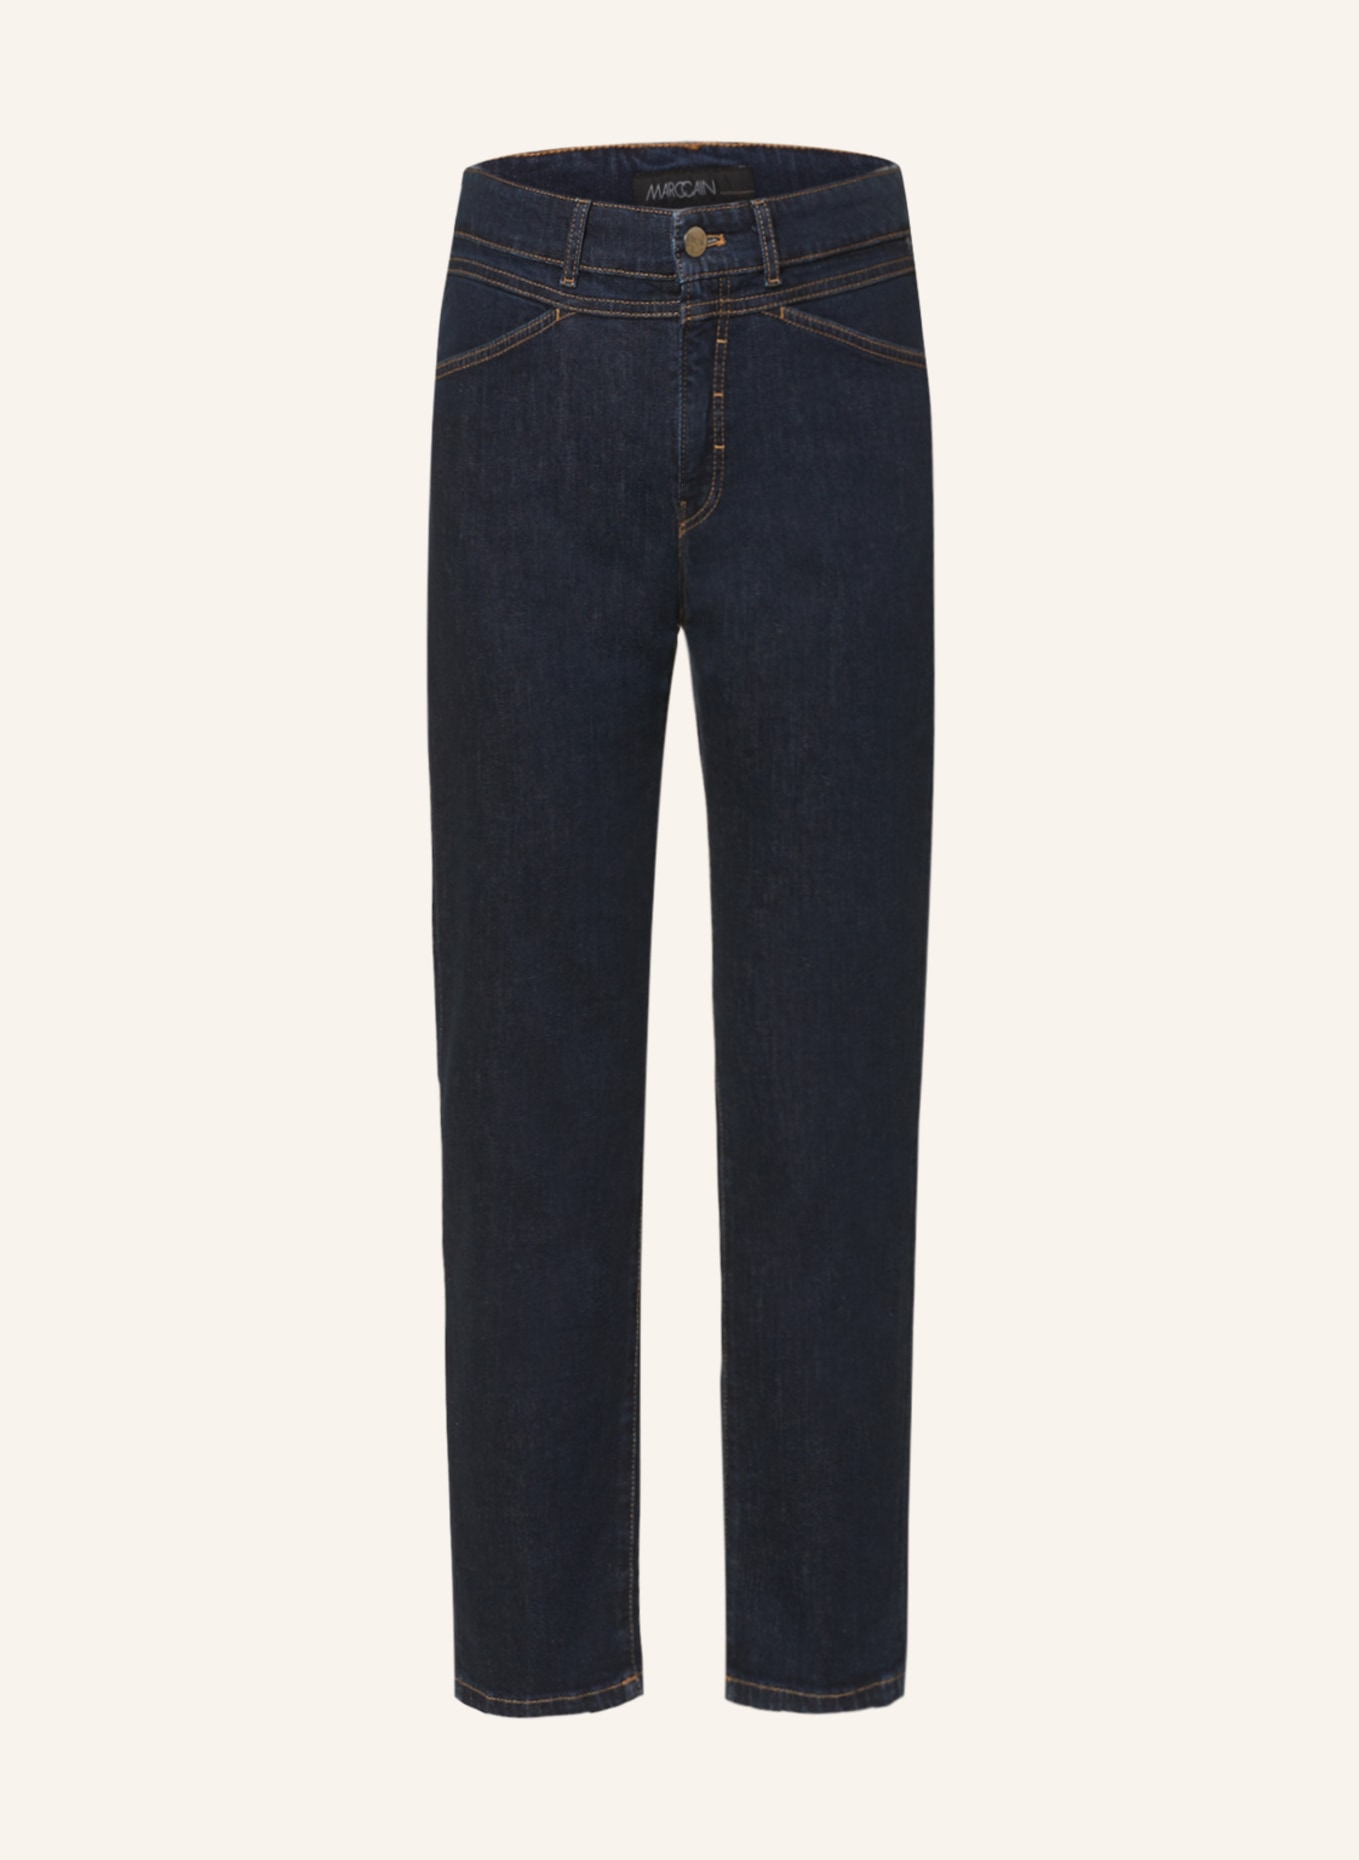 MARC CAIN Jeans RIAD, Farbe: 357 vintage indigo (Bild 1)